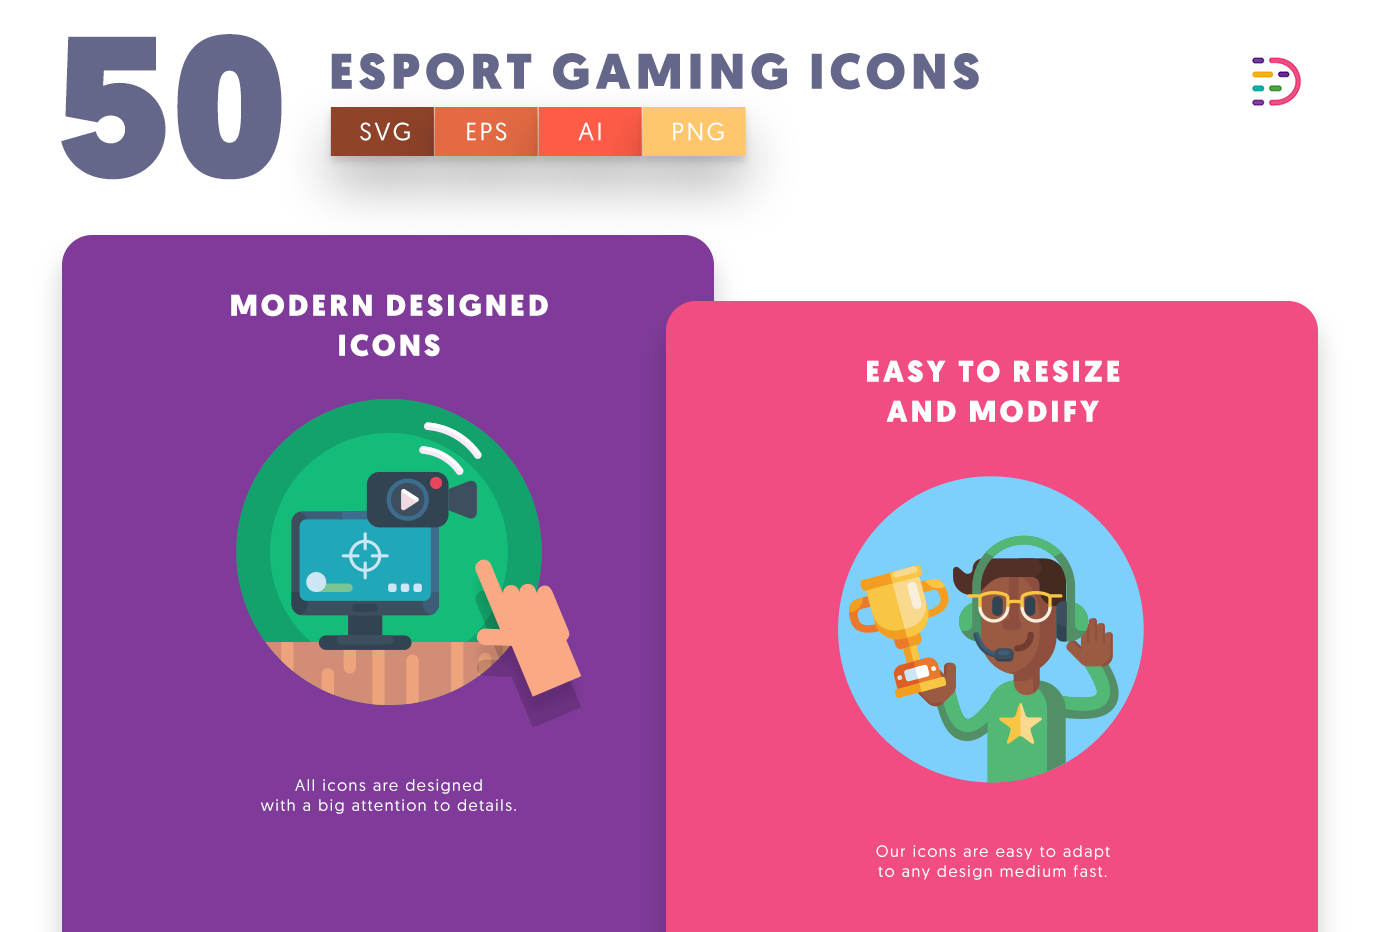 Esport Gaming icons